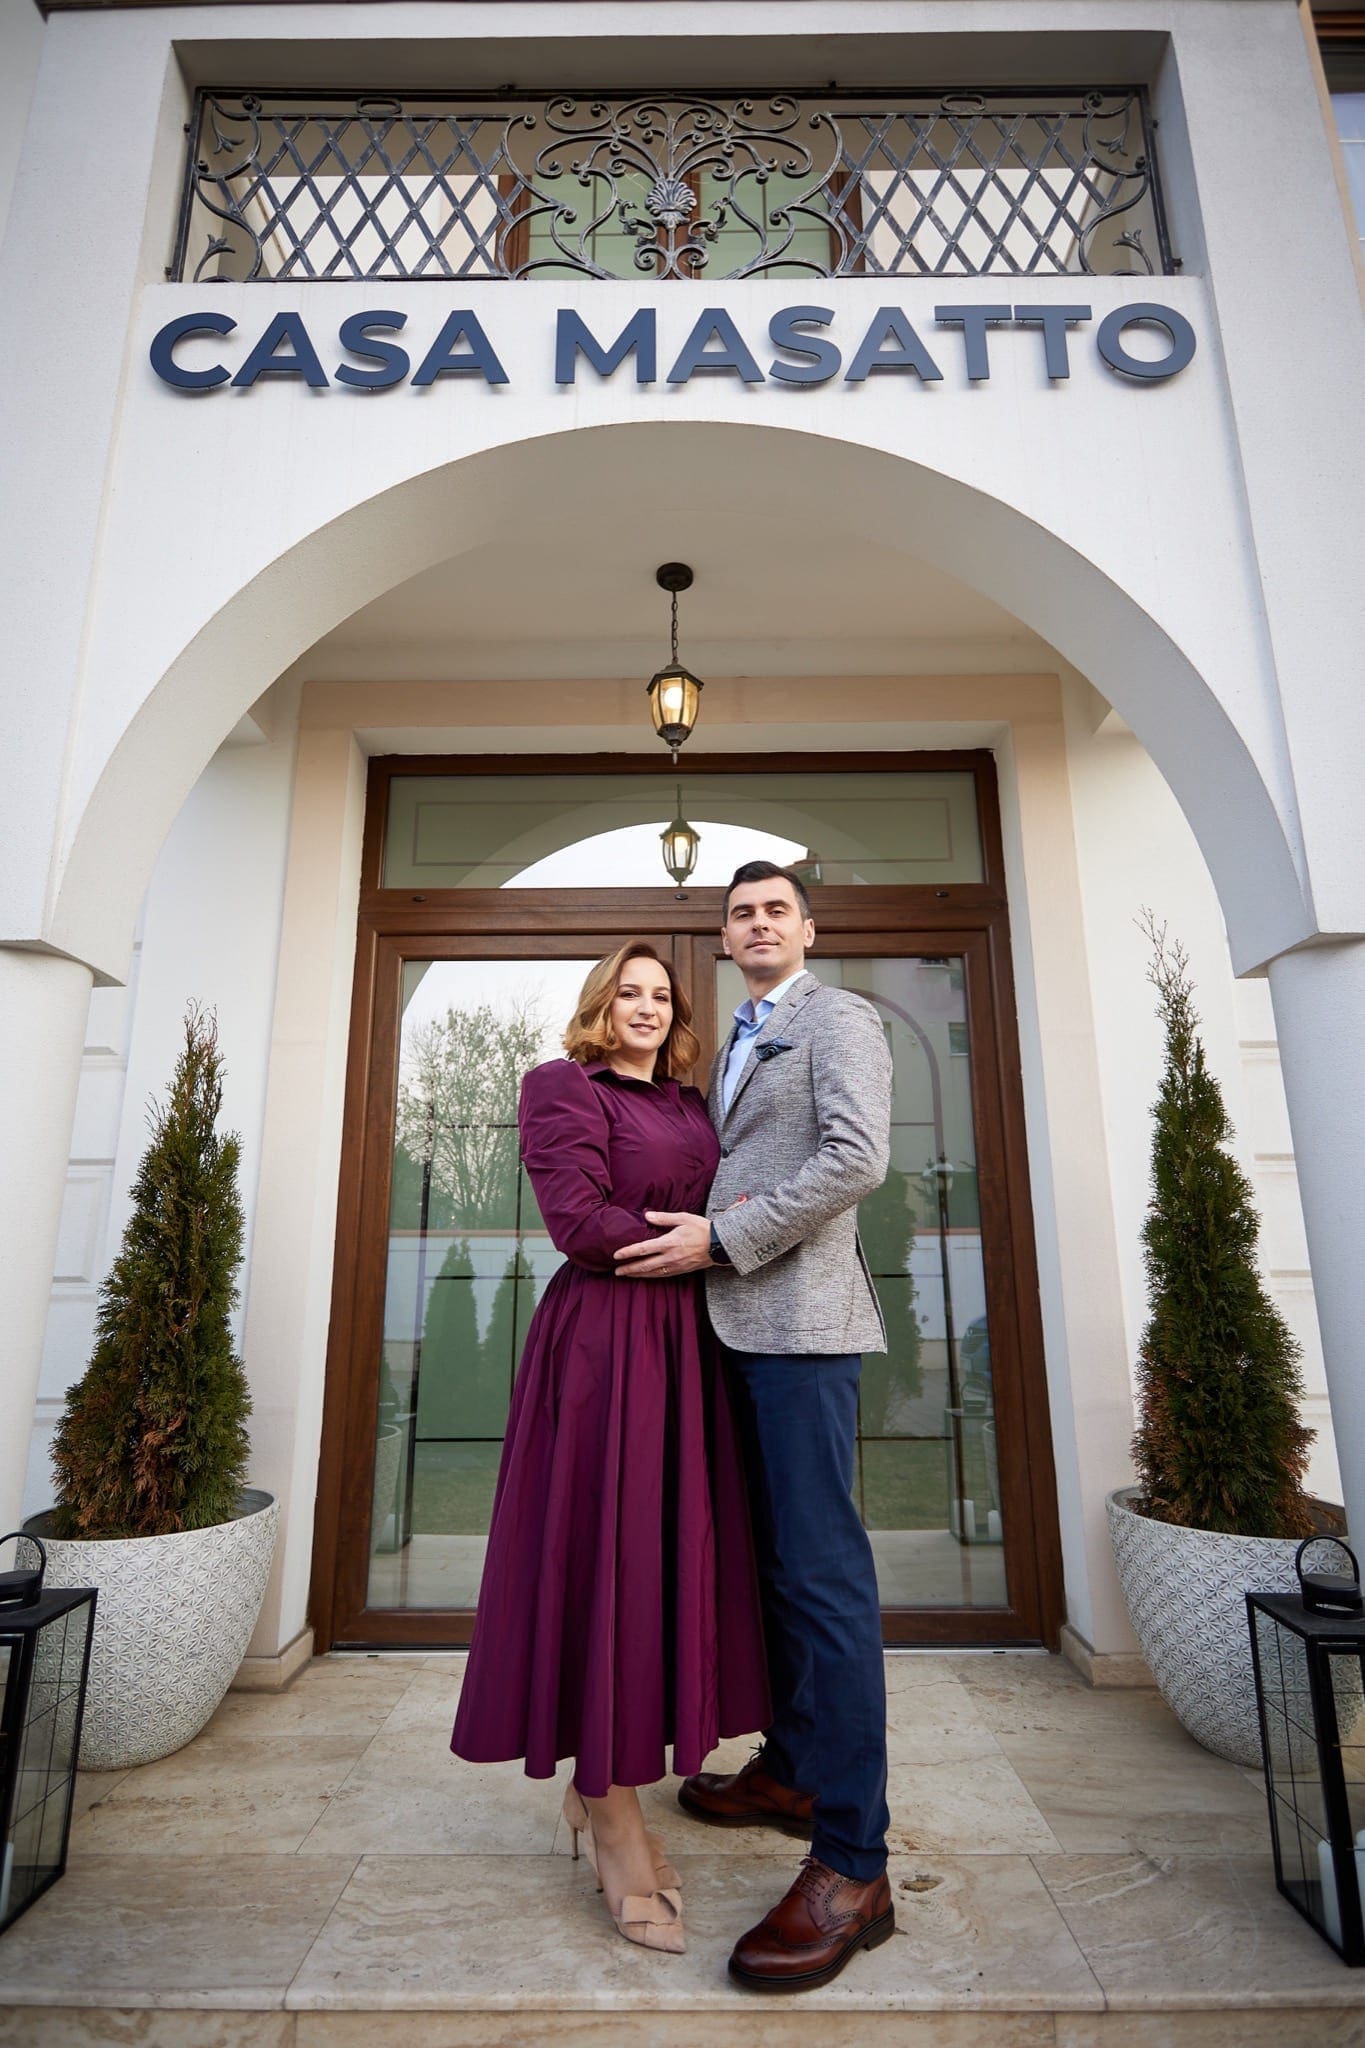 Masatto 19 Februarie 0570 copy - Casa Masatto, showroom-ul concept unde fotoliile de masaj redefinesc un stil de viață